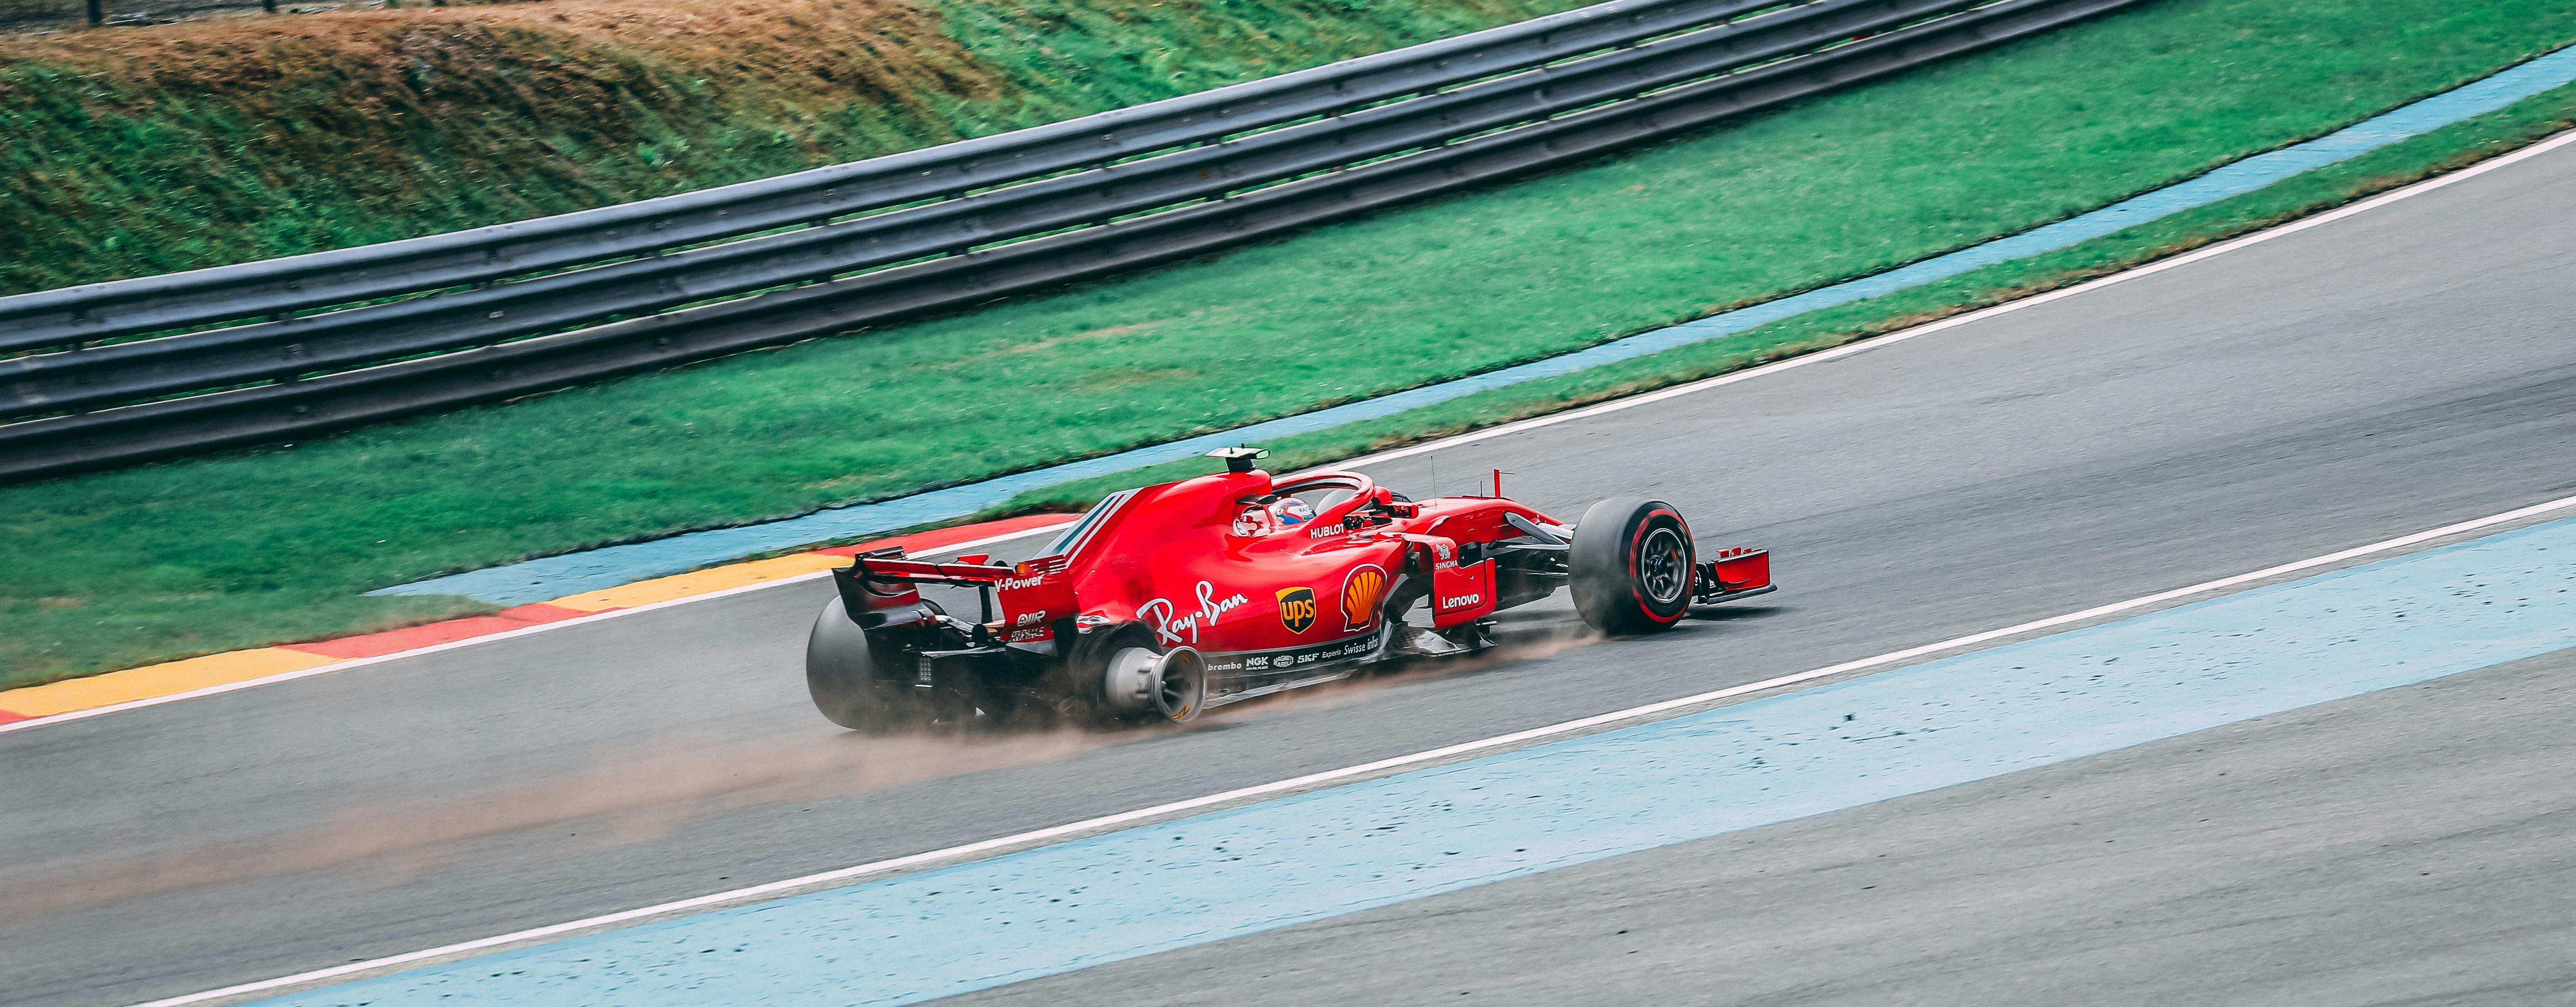 Free stock photo of f1, F1 Car, Ferrari